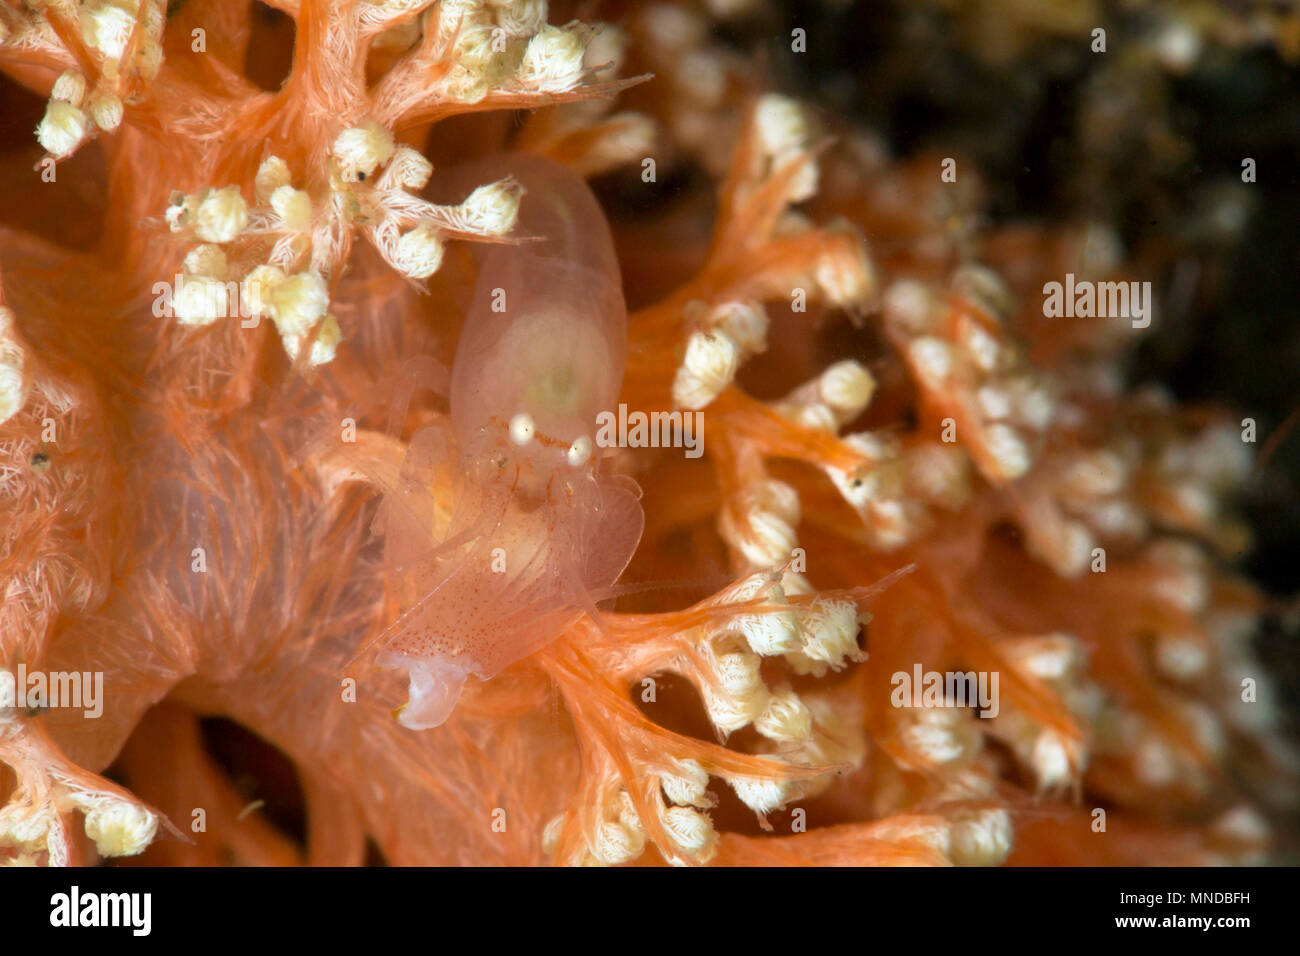 Soft-coral pistol shrimp (Synalpheus neomeris). Picture was taken in Anilao, Philippines Stock Photo